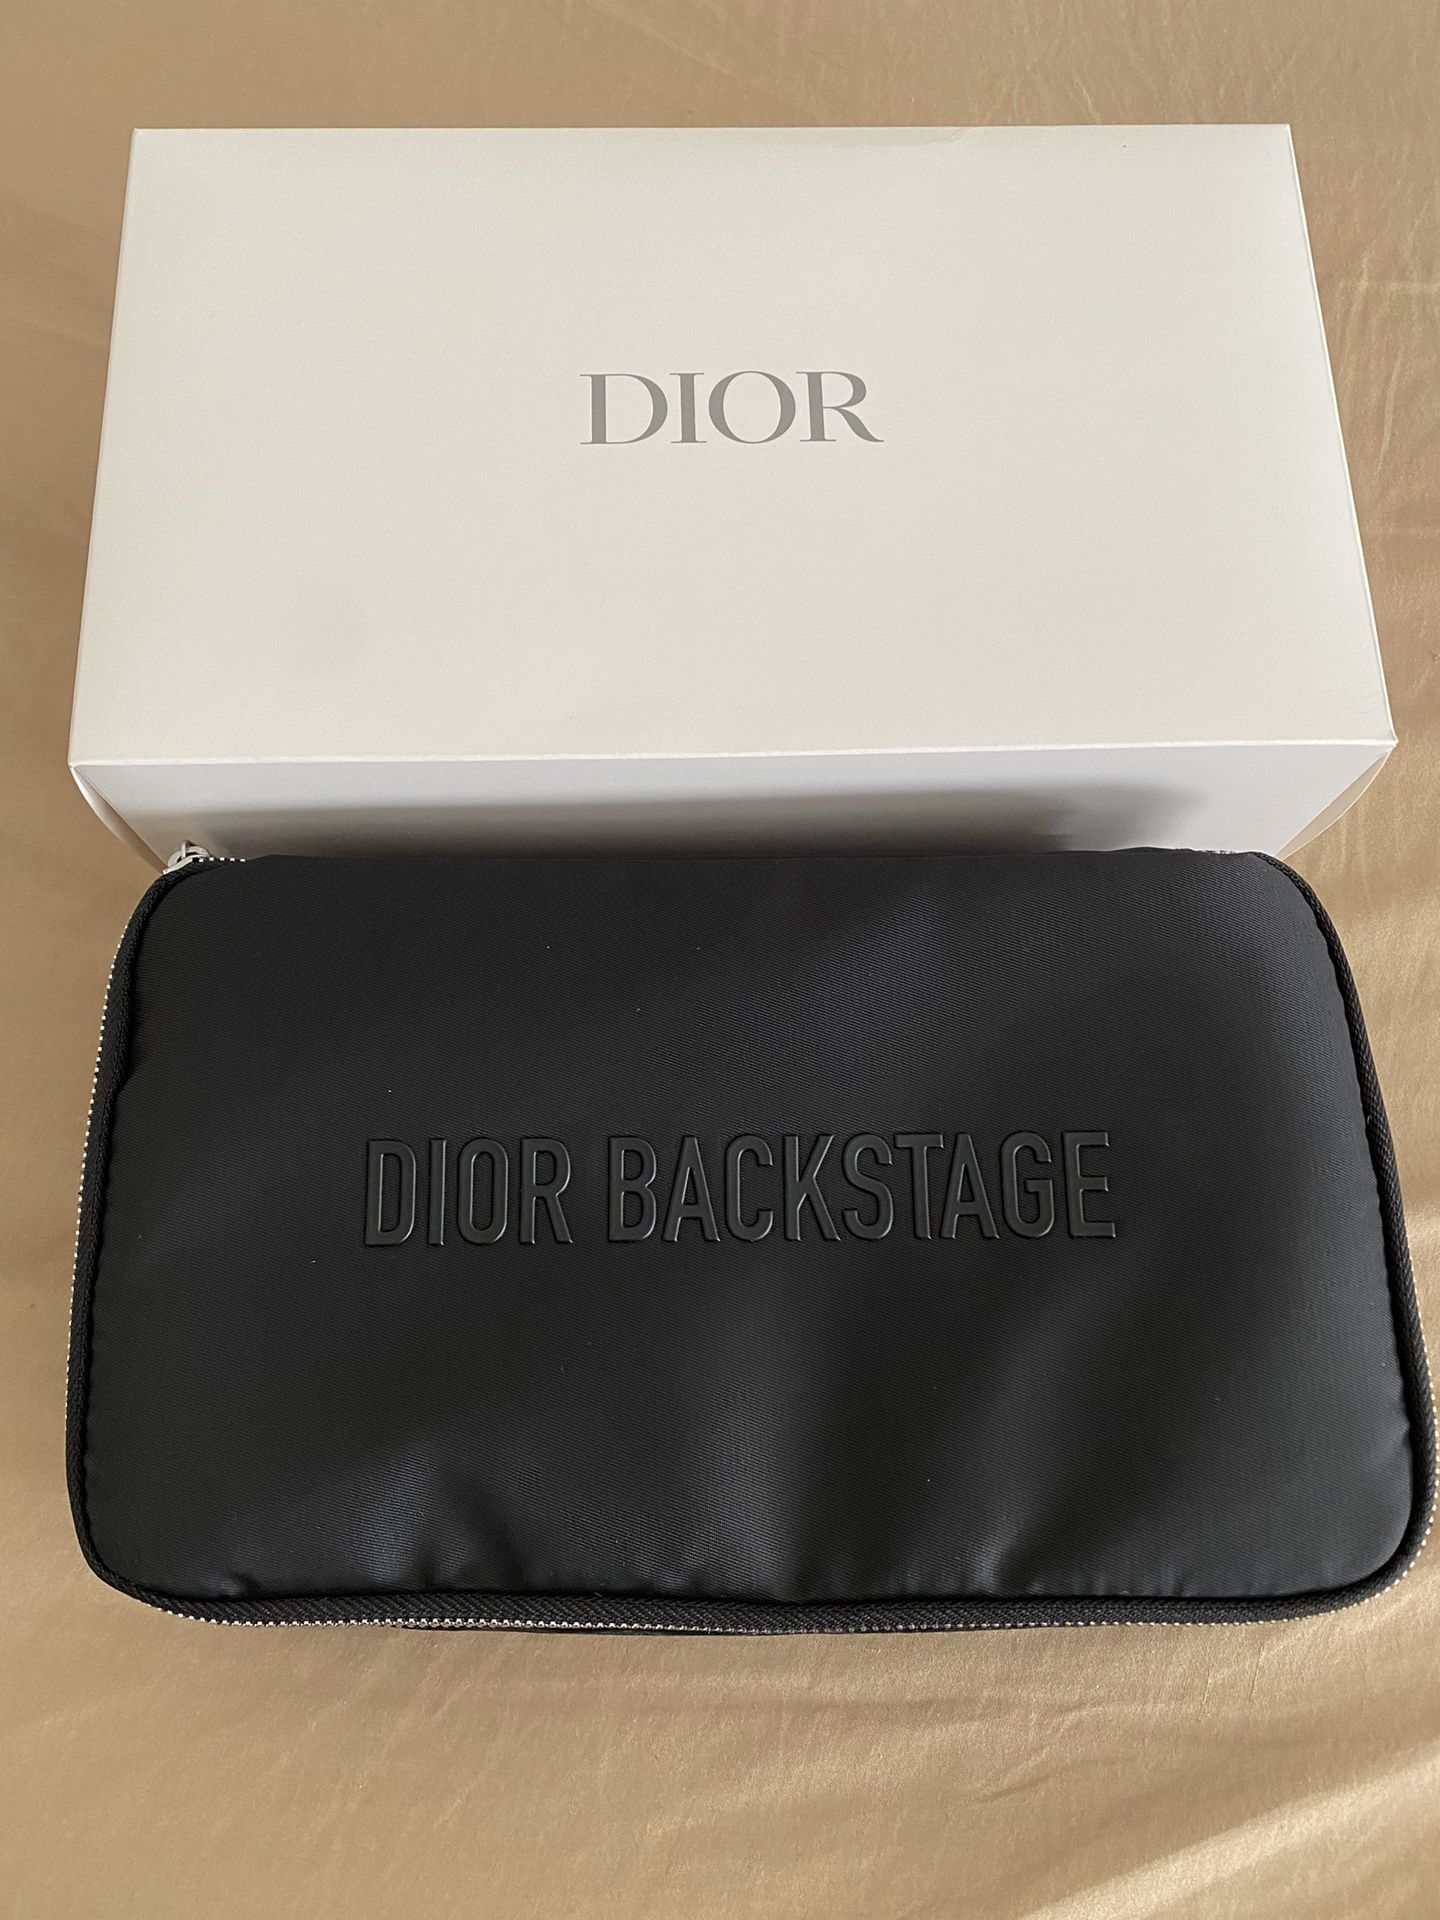 Christian Dior Toiletry Bag